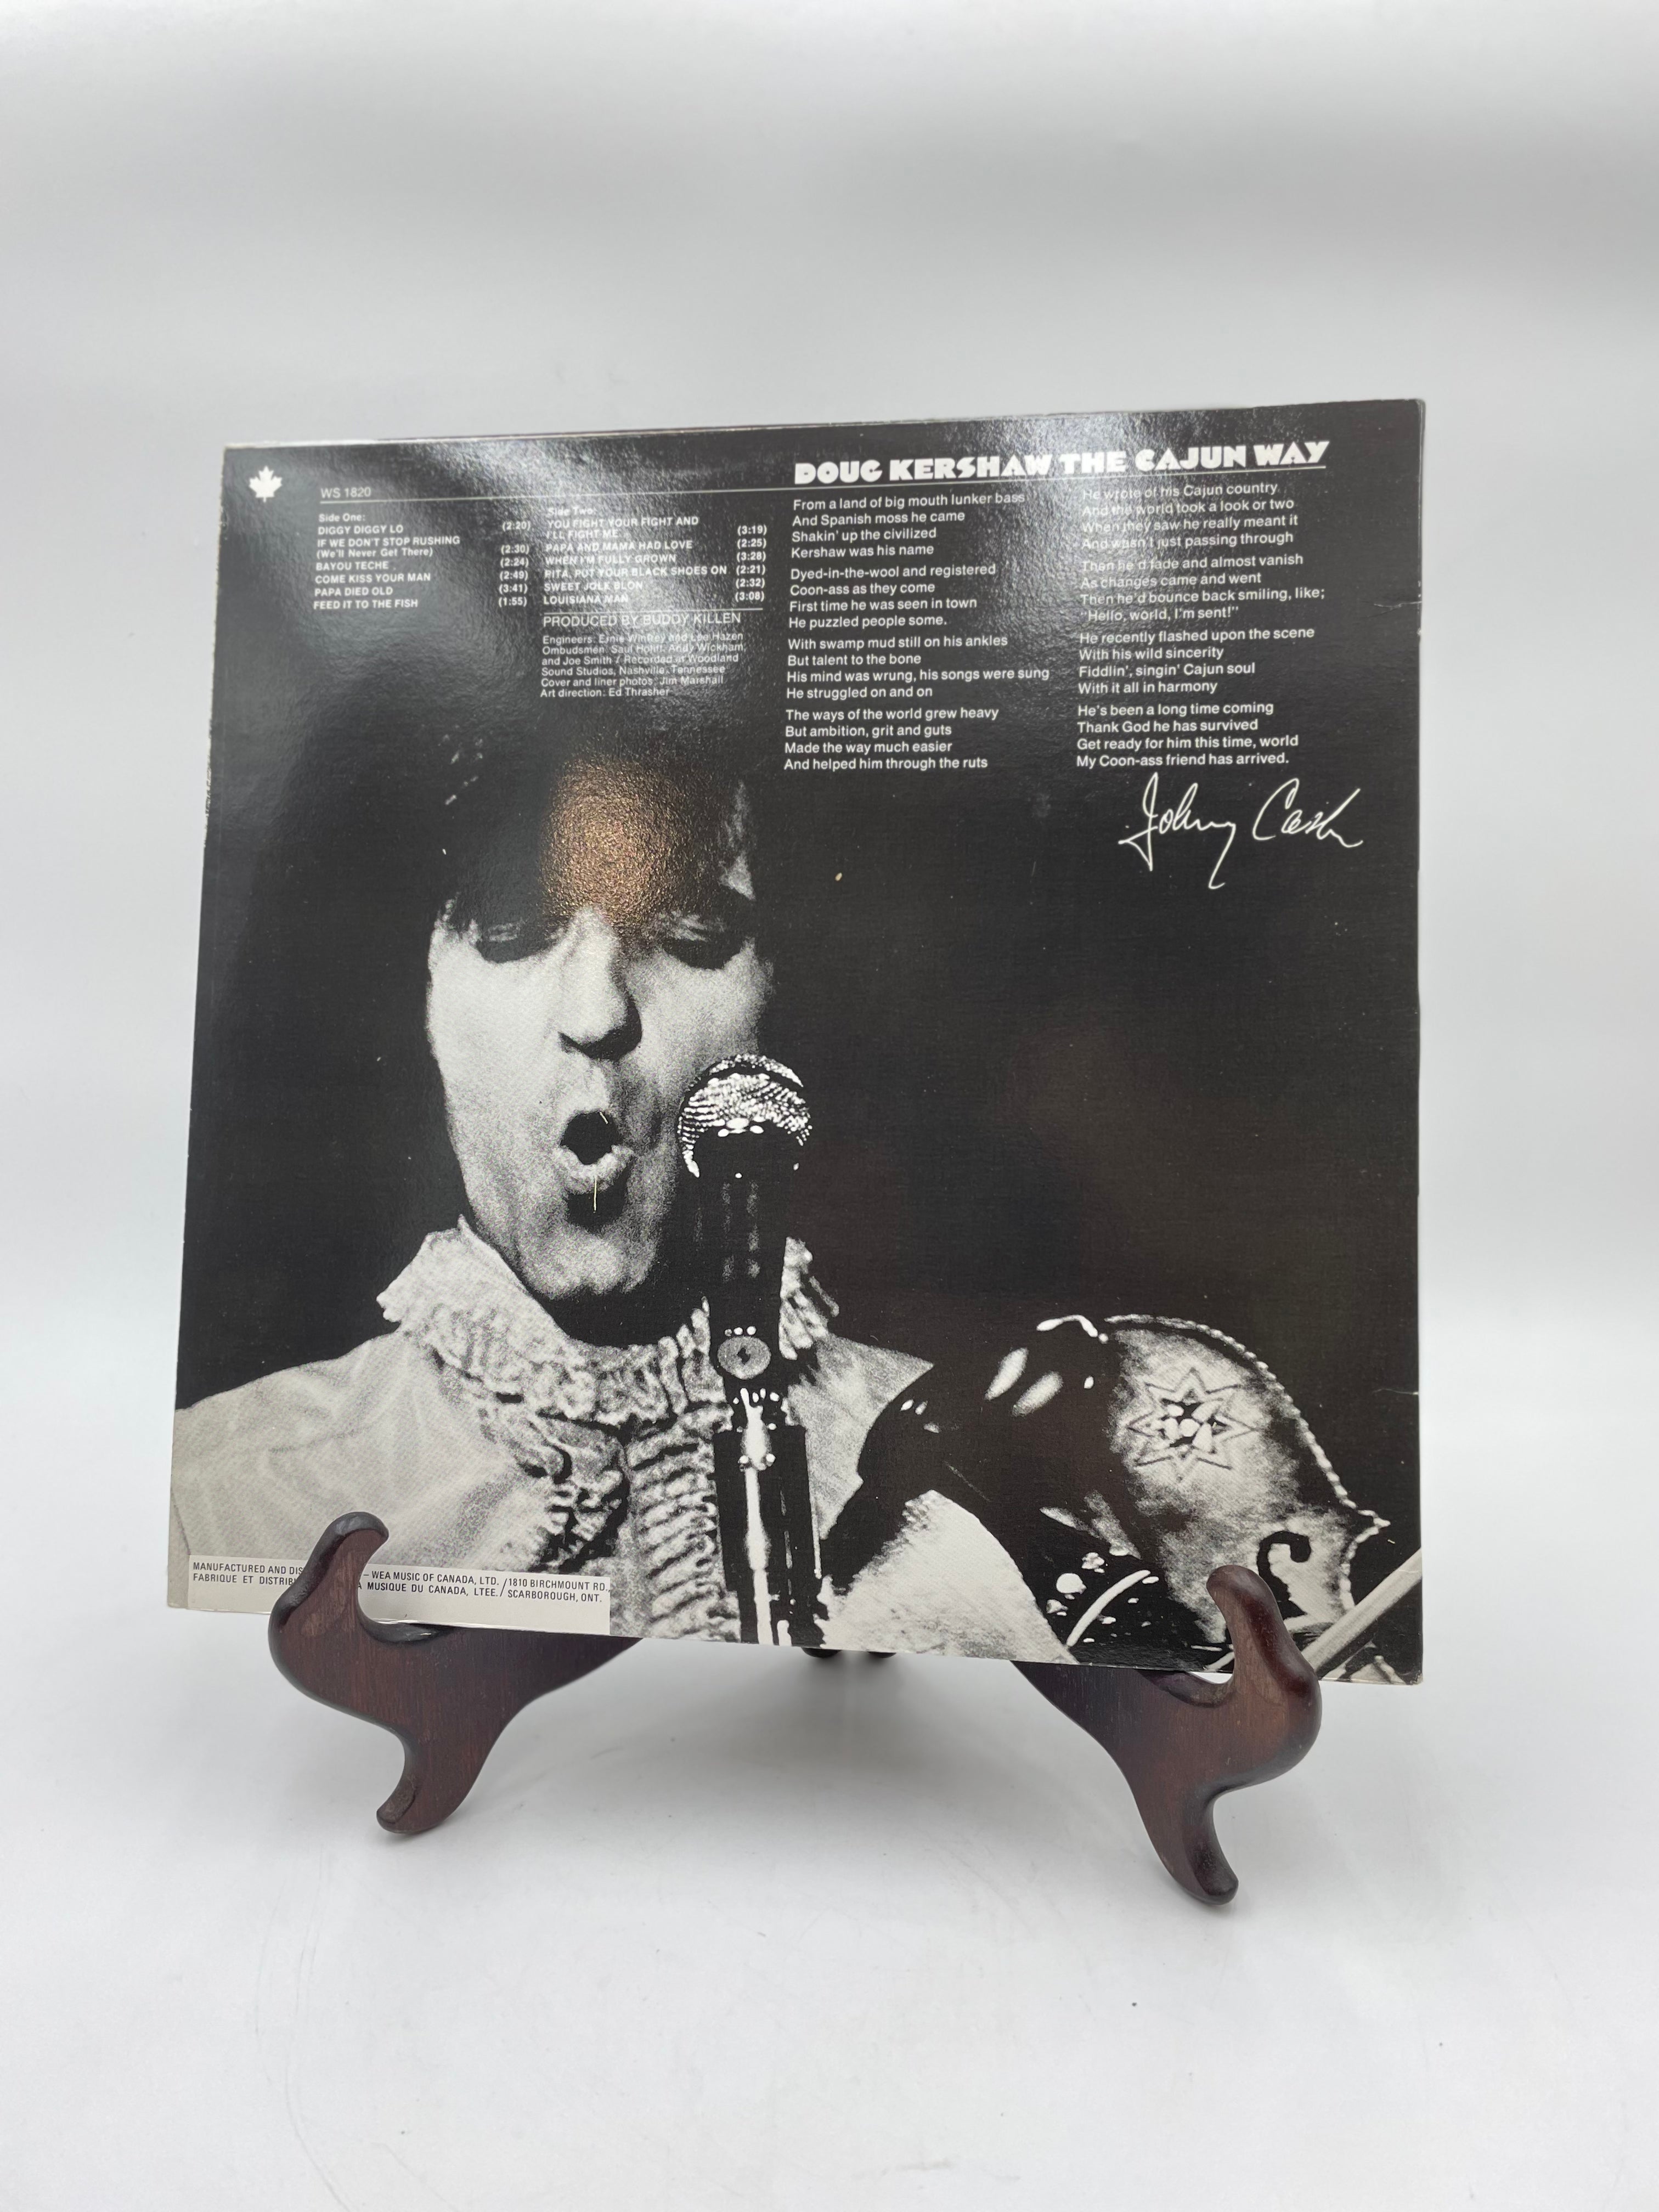 Doug Kershaw - The Cajun Way - Vinyl